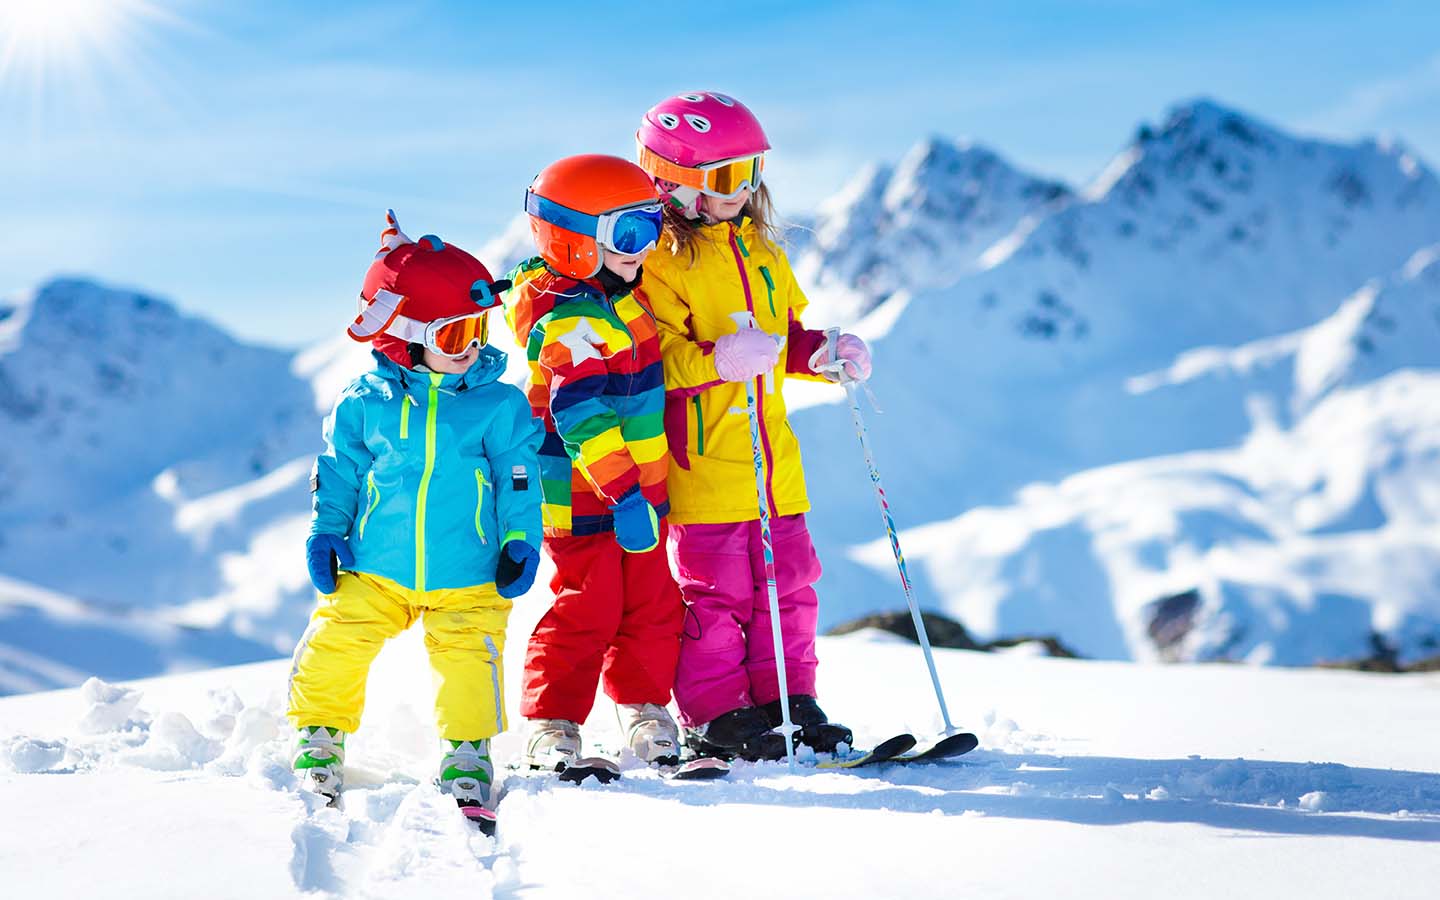 Kinderski in den Bergen, Kinder in der Skischule